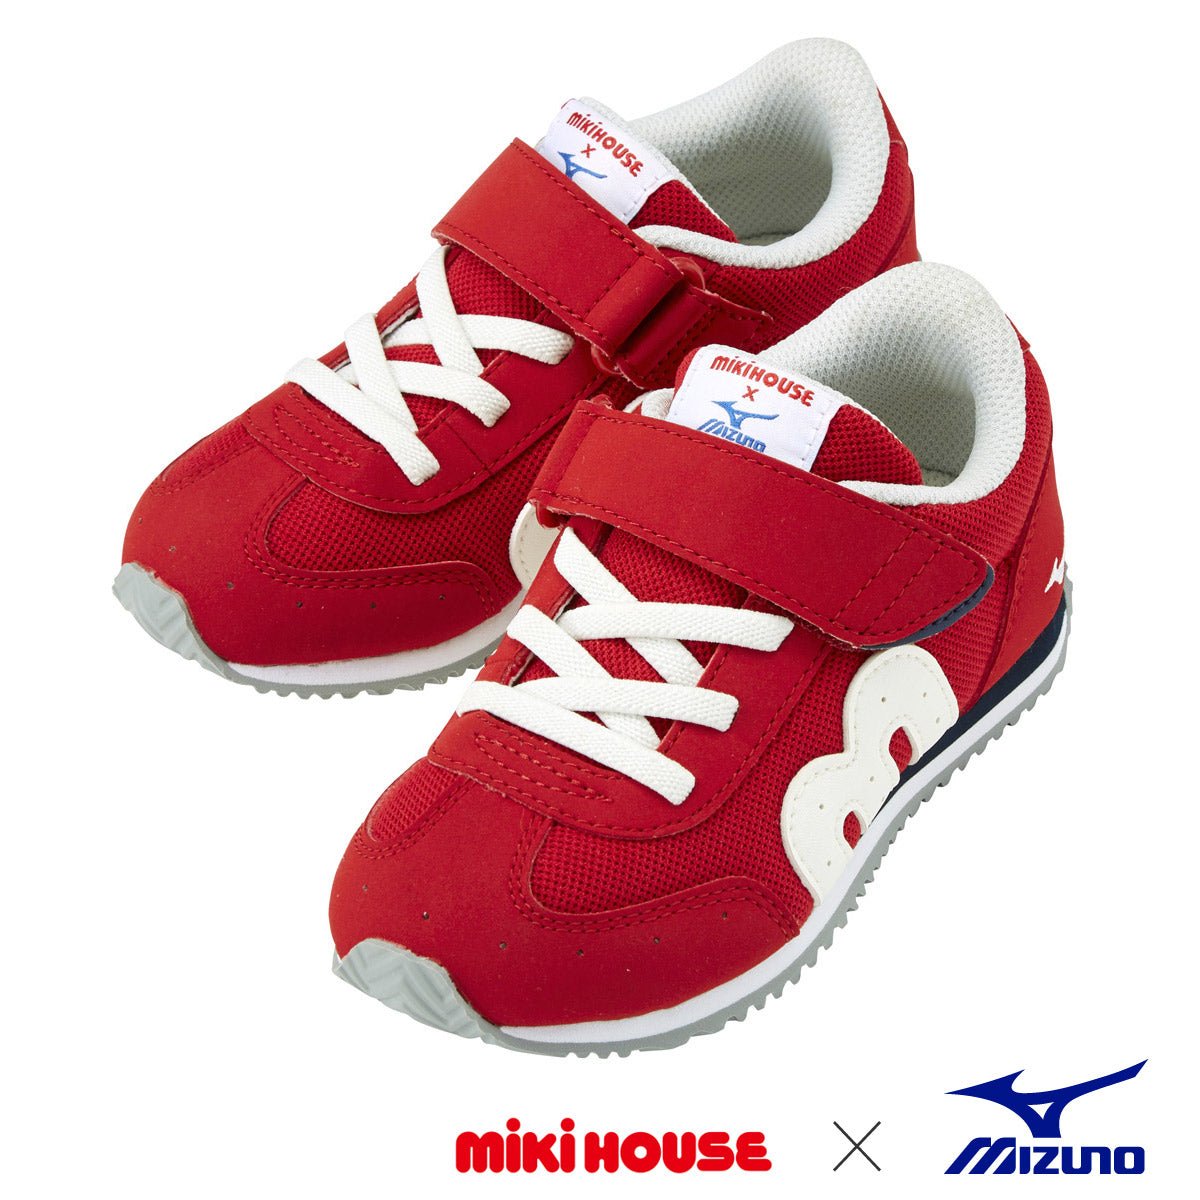 Voorschrijven Weg Eenzaamheid MIKI HOUSE & Mizuno Shoes for Kids – MIKI HOUSE USA